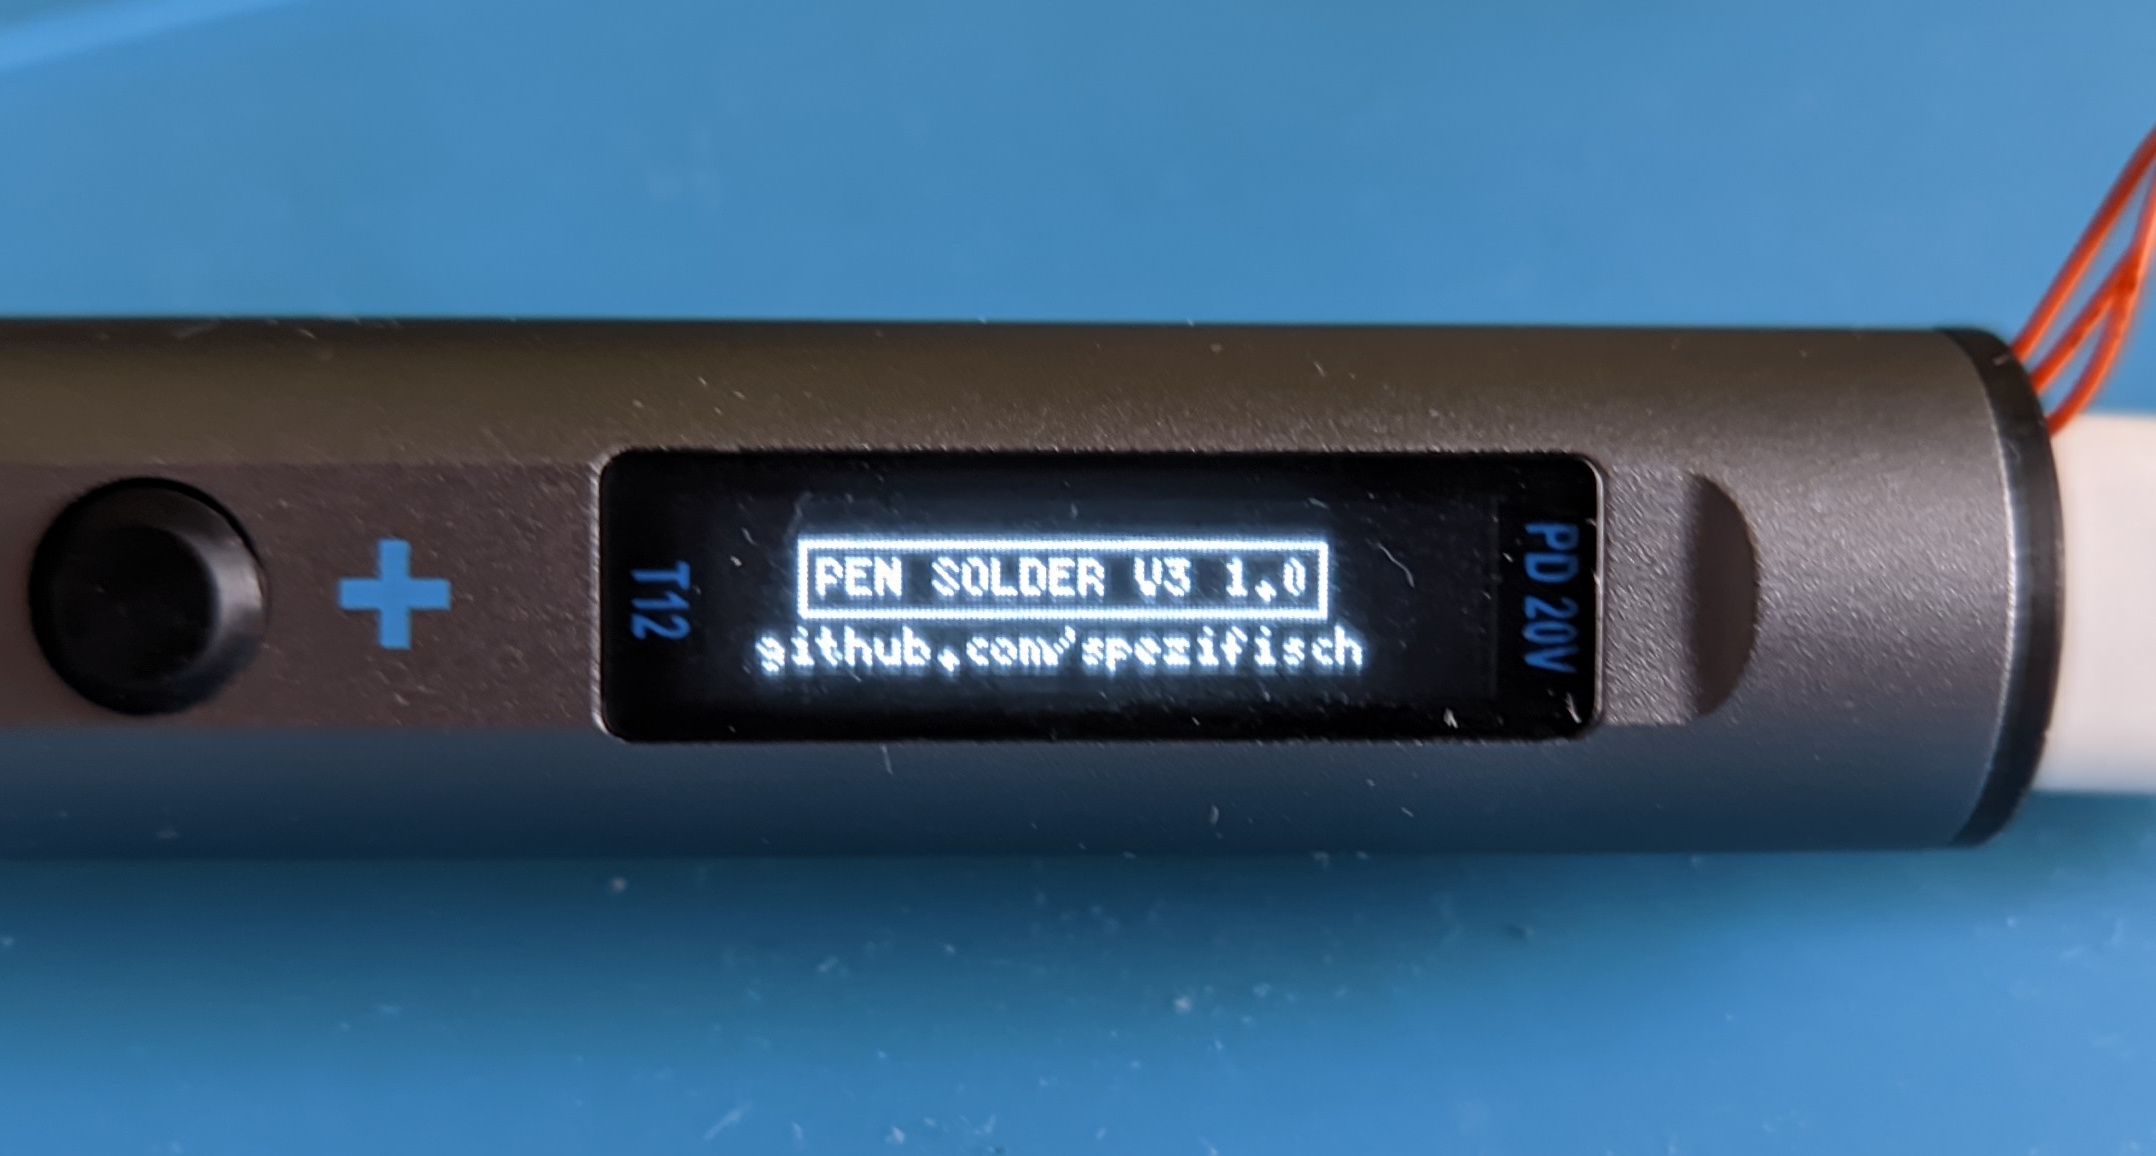 Soldering iron showing test 'Pen Solder V3 1.0' and a github link